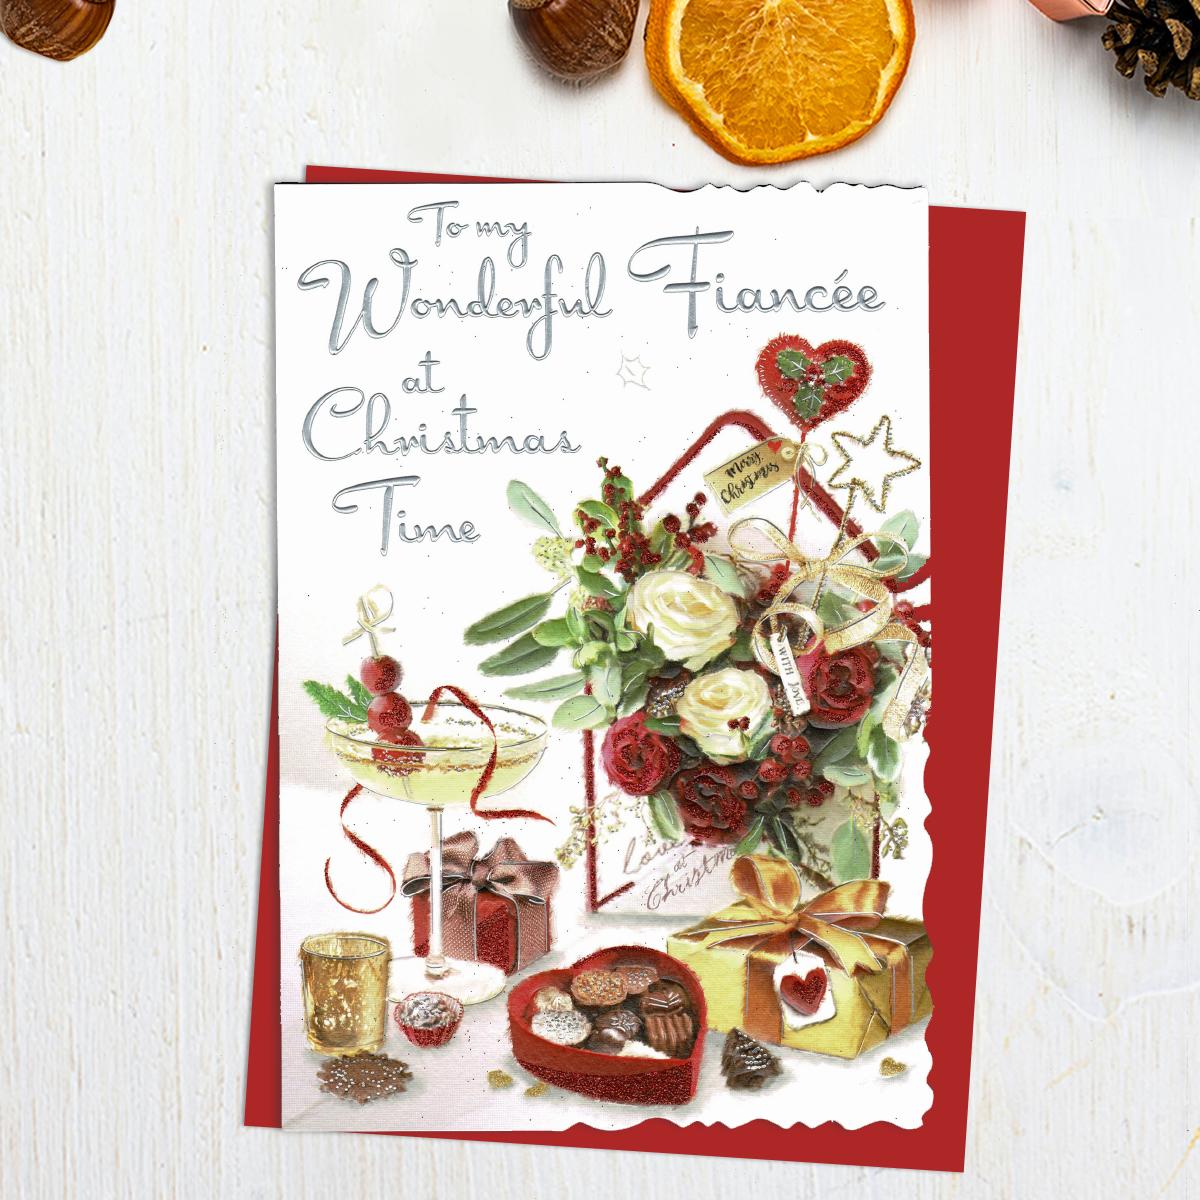 Fiancée Christmas Card Alongside Its Red Envelope